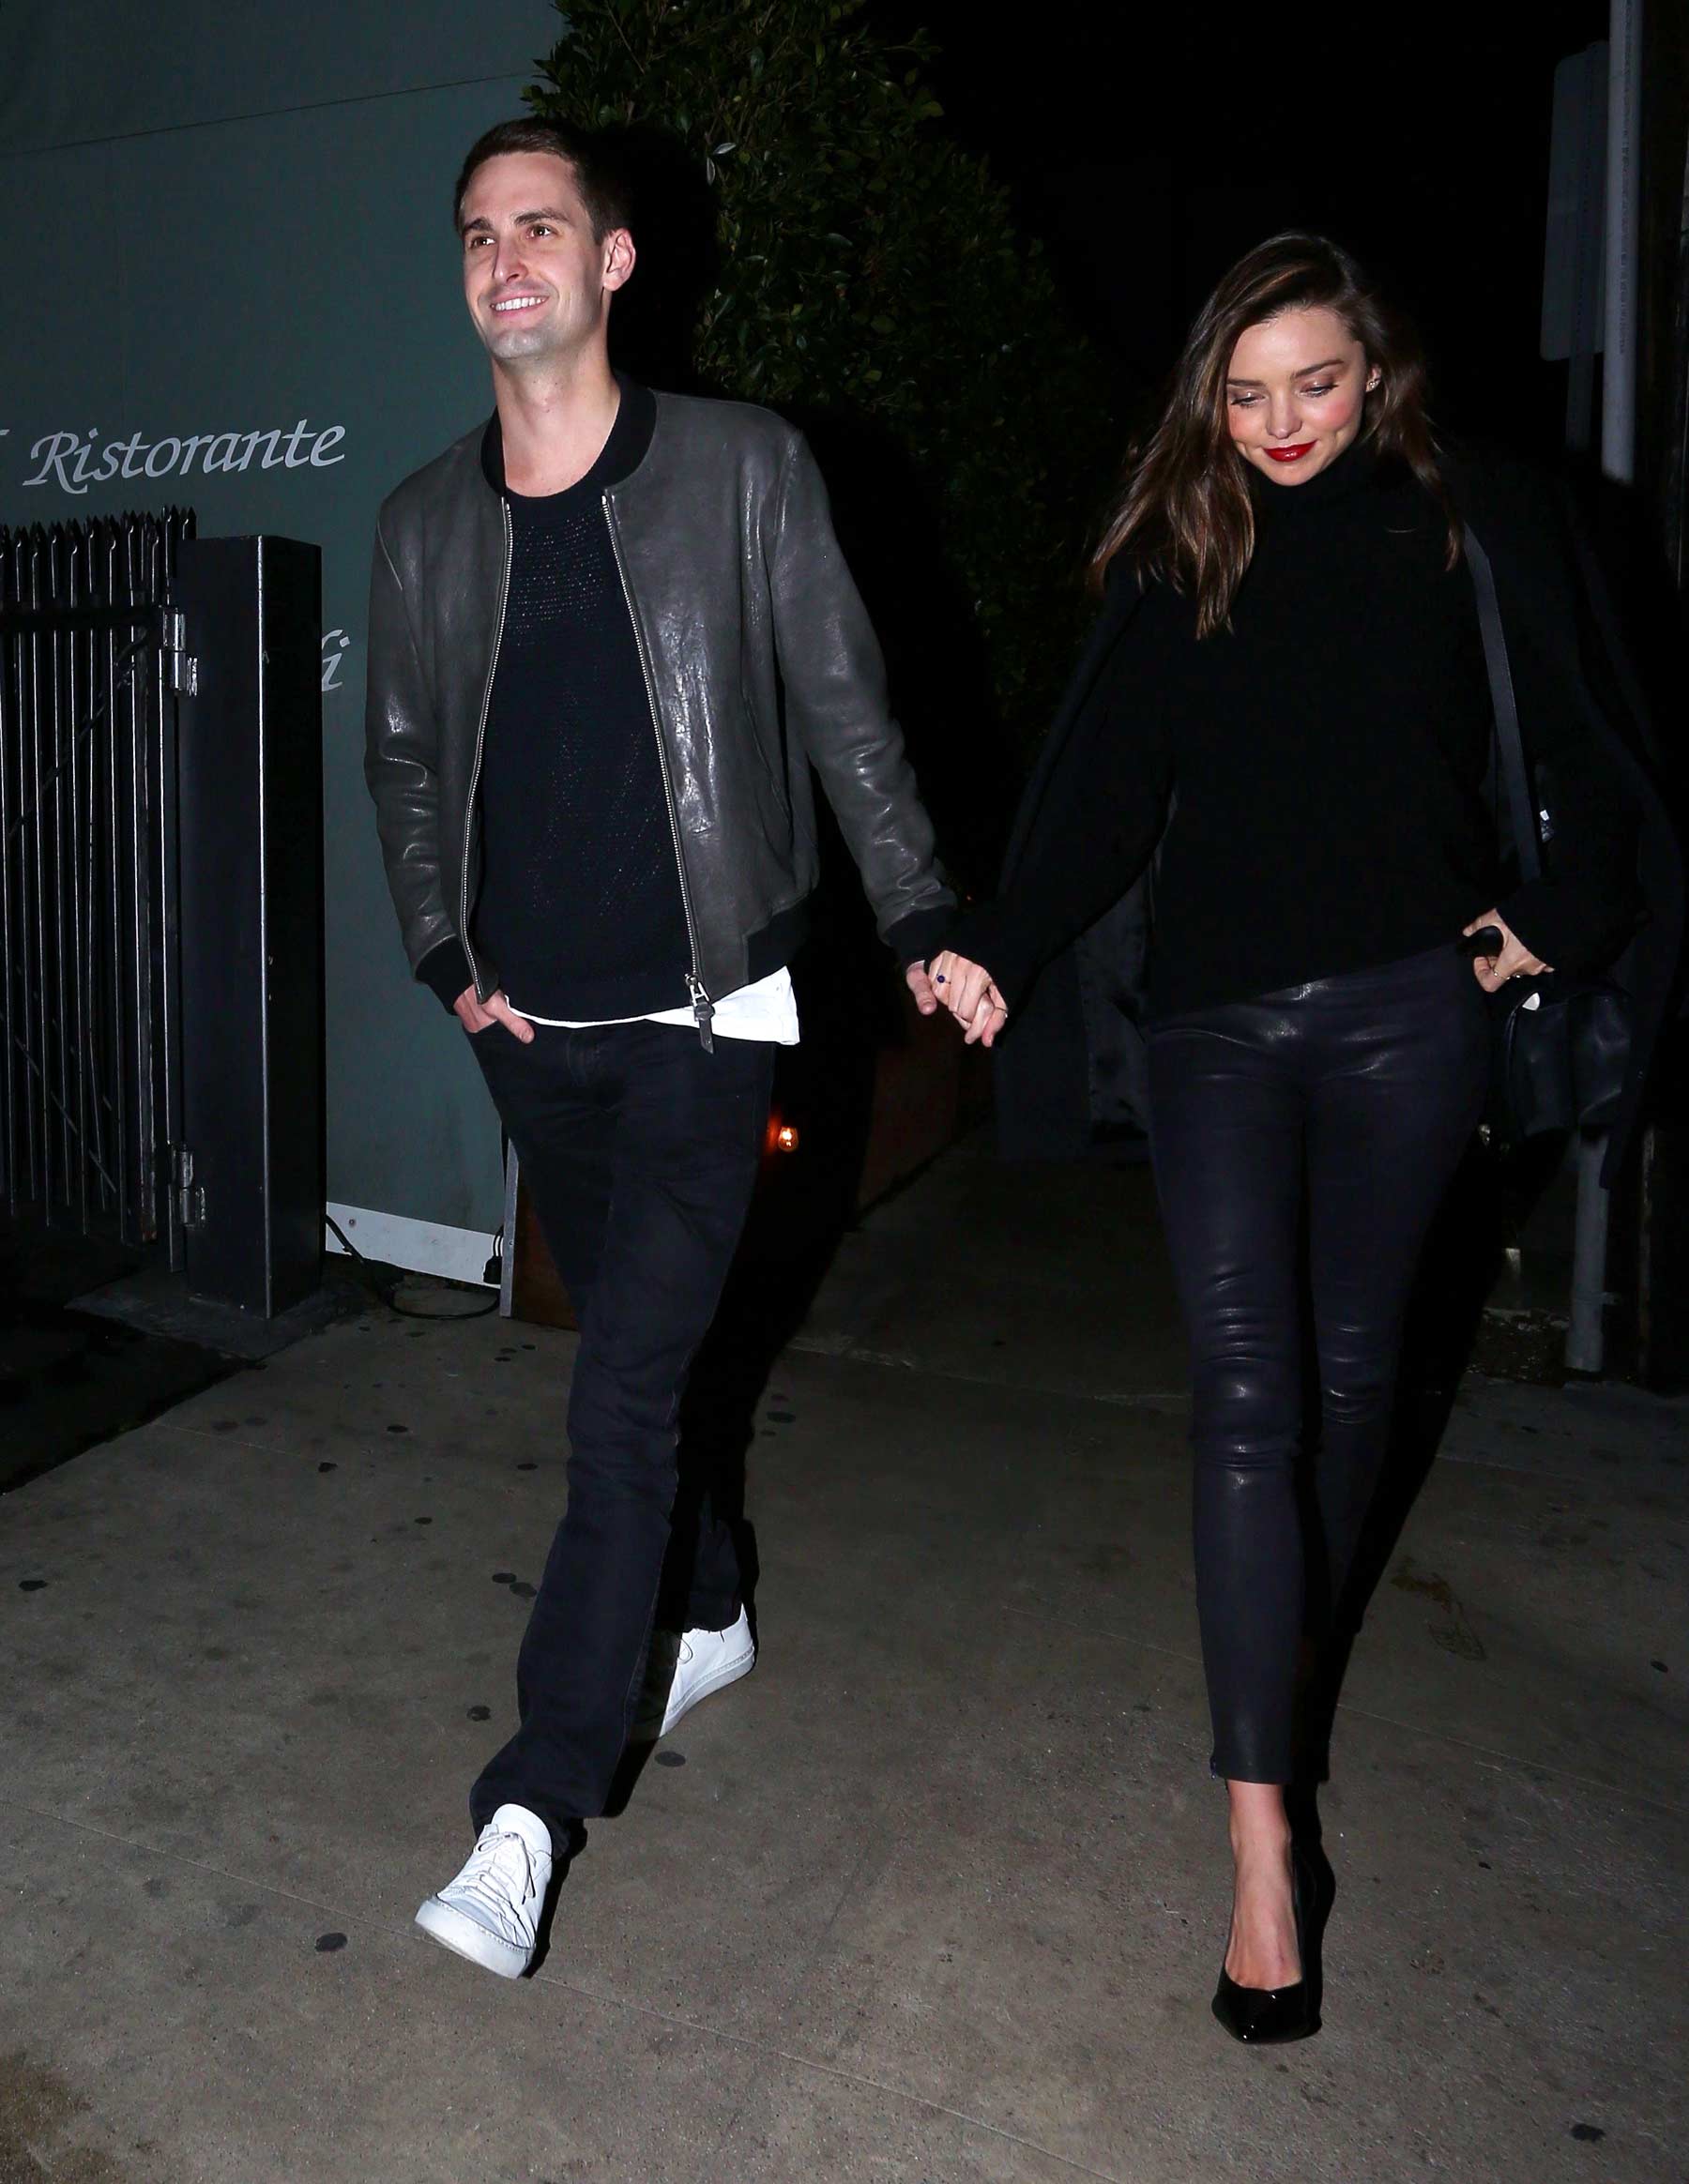 Miranda Kerr during a romantic evening in Beverly Hills